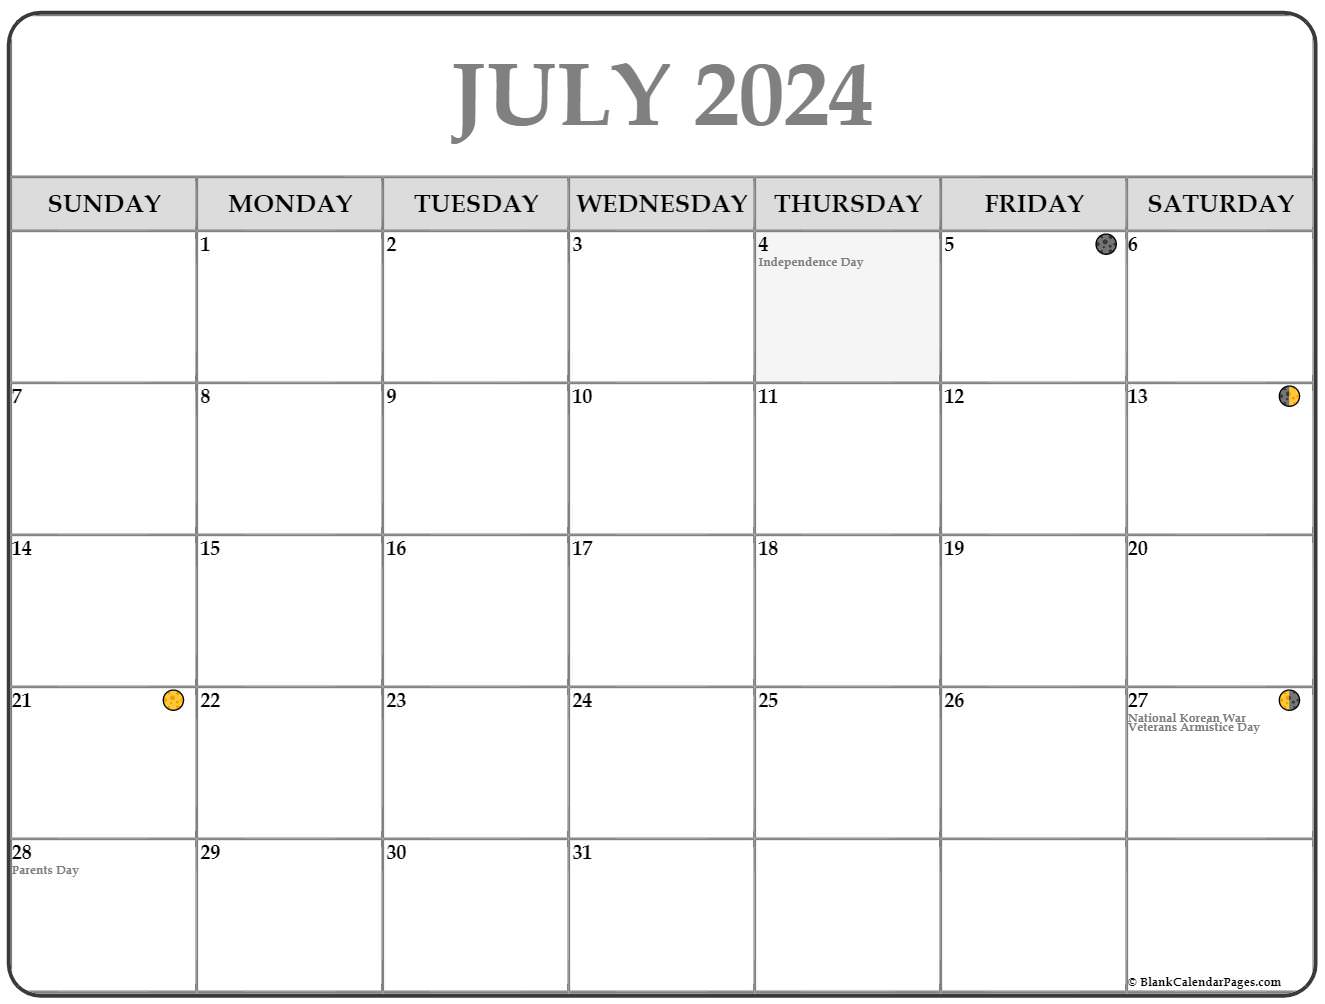 Moon Phase Calendar July 2024 Mil Lauree